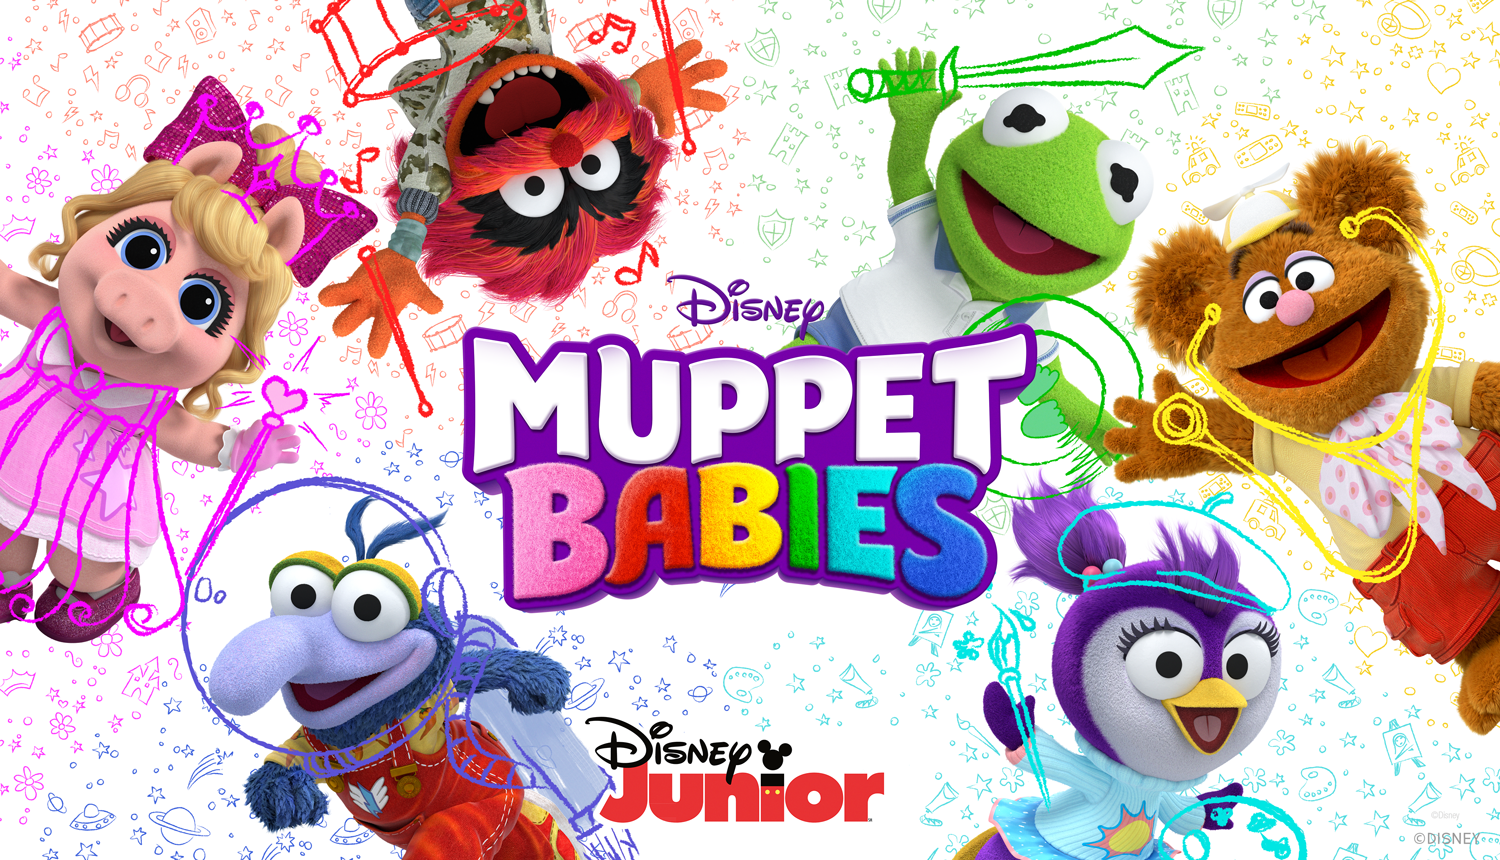 Disney Junior Muppet Babies